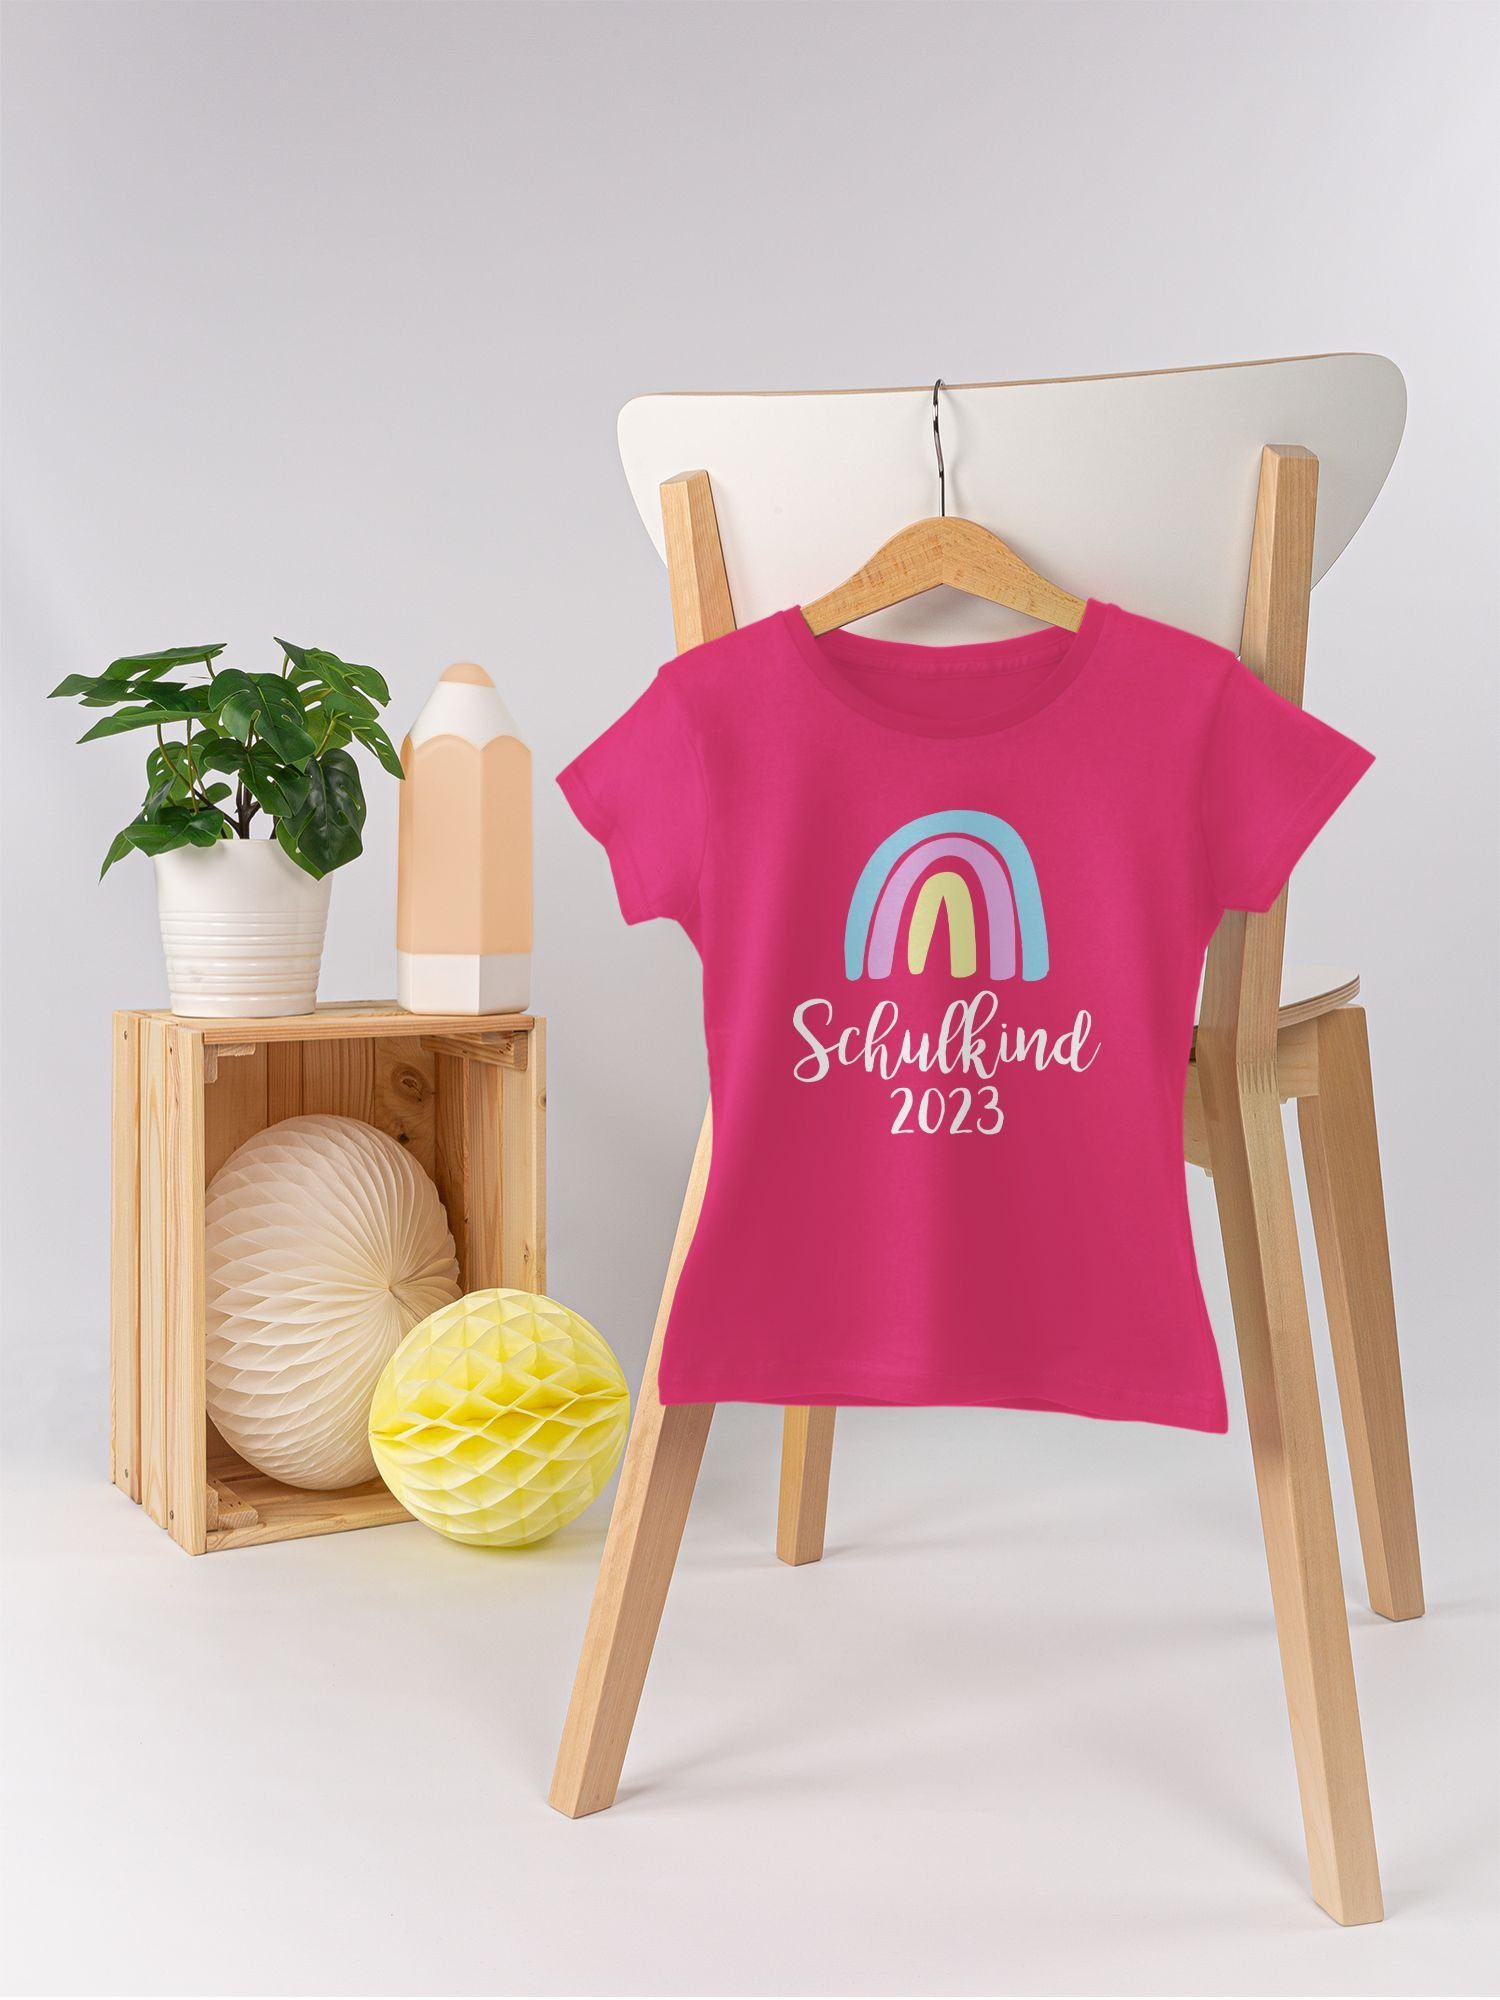 Shirtracer T-Shirt Schulkind 2023 Regenbogen Pastell Einschulung Weiß Mädchen Fuchsia / 1